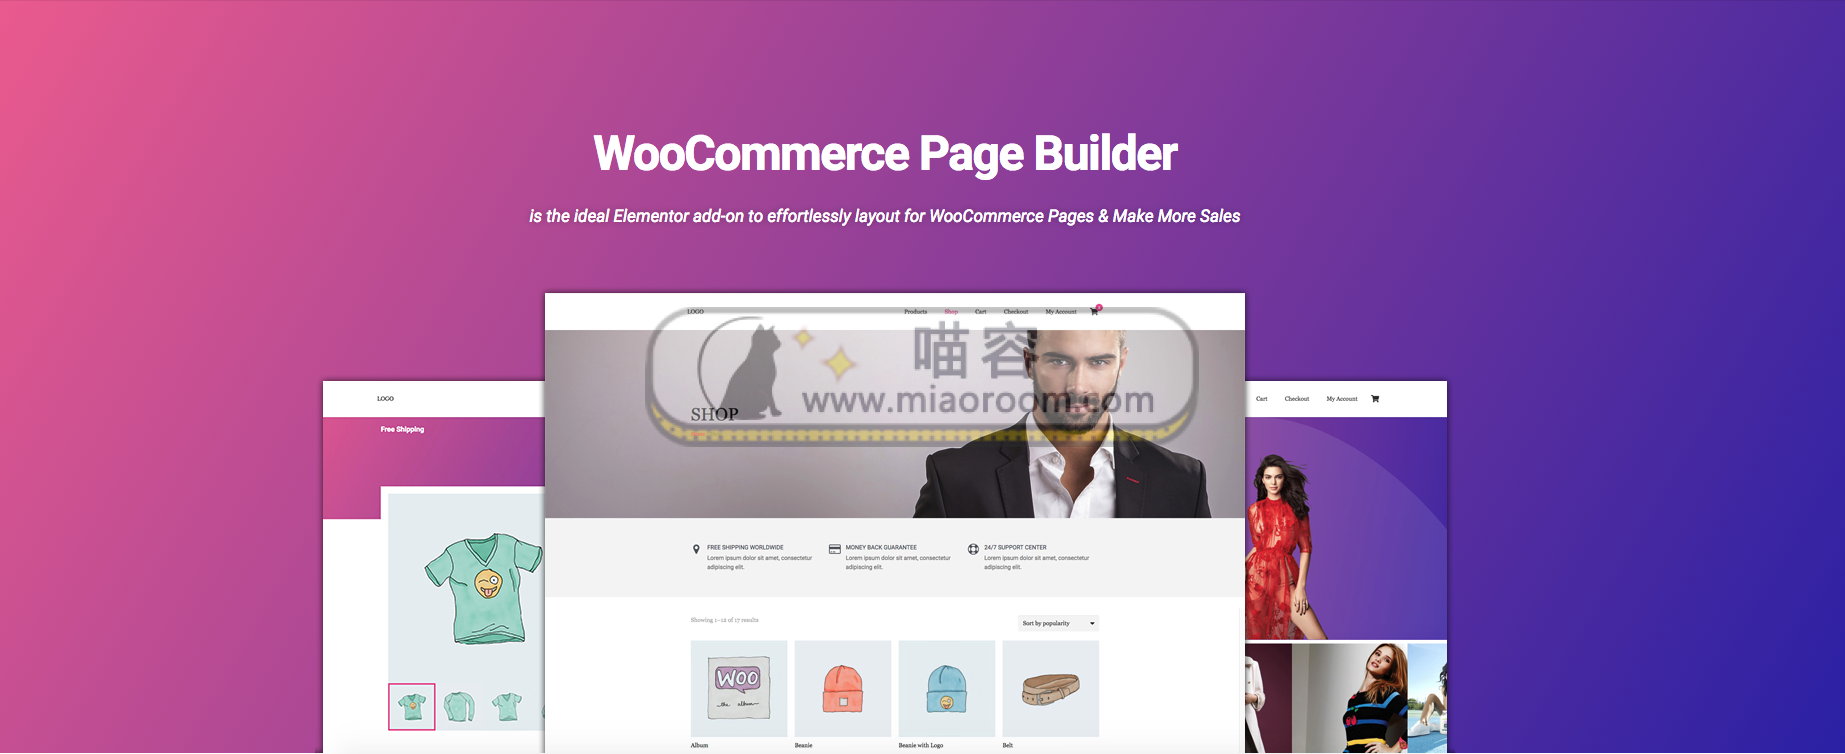 「WP插件」 WooCommerce Page Builder For Elementor  破解专业版 【英文原版】 - 第1张